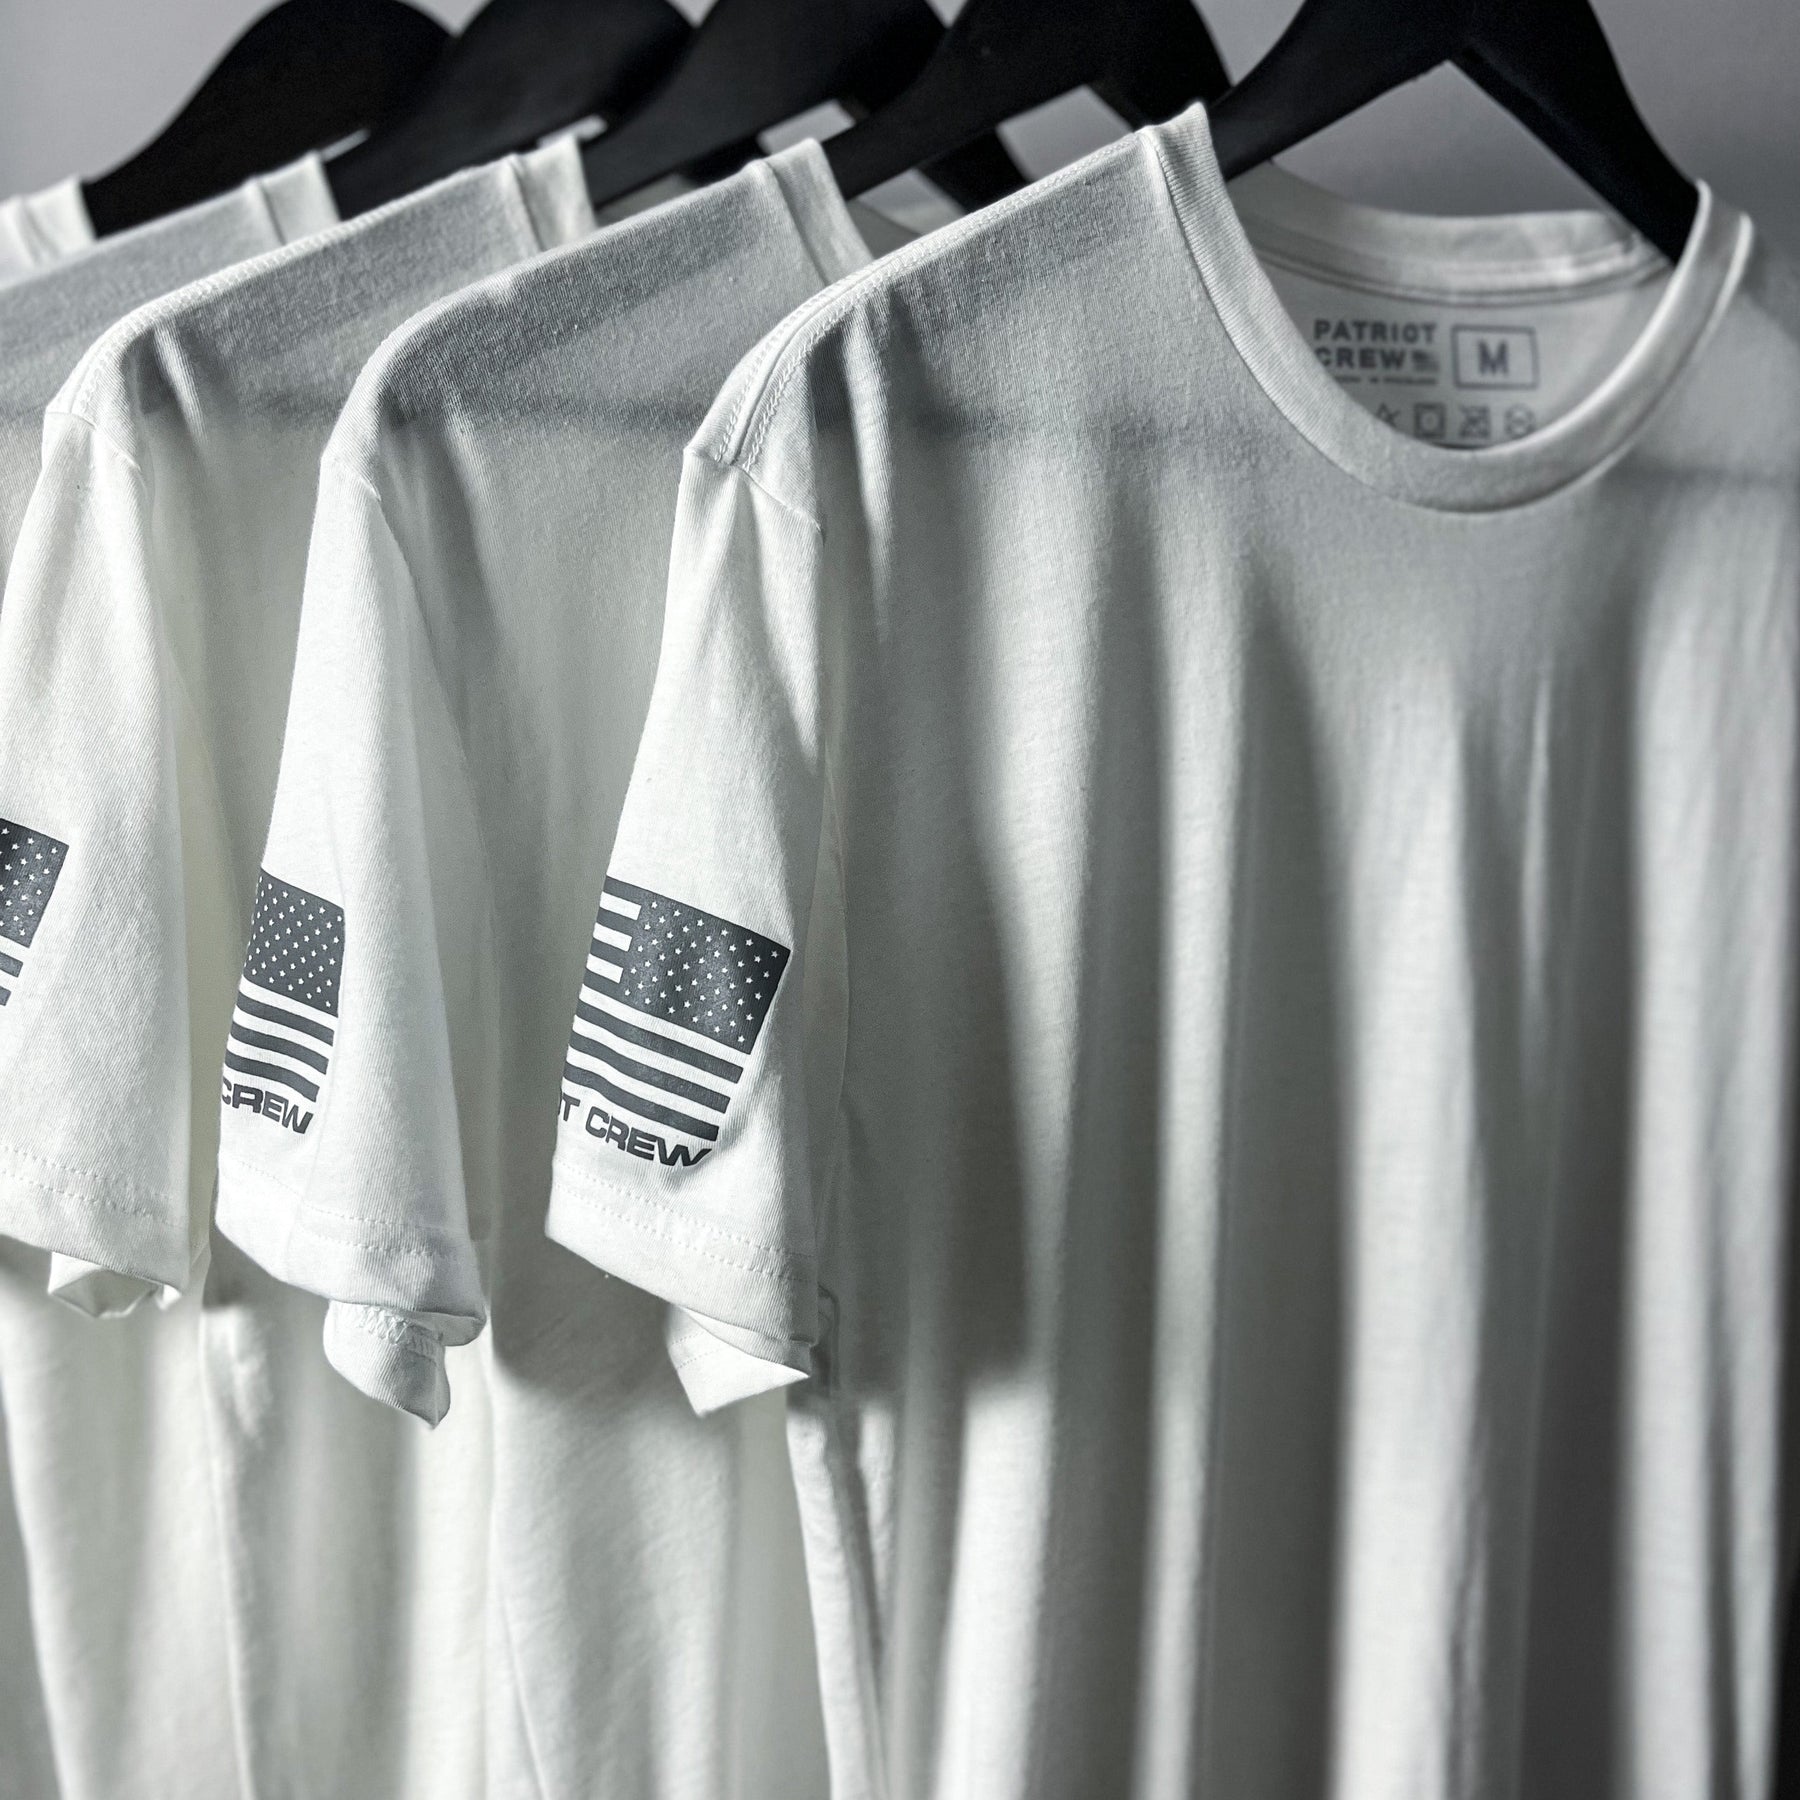 White T-Shirt (5 Pack)